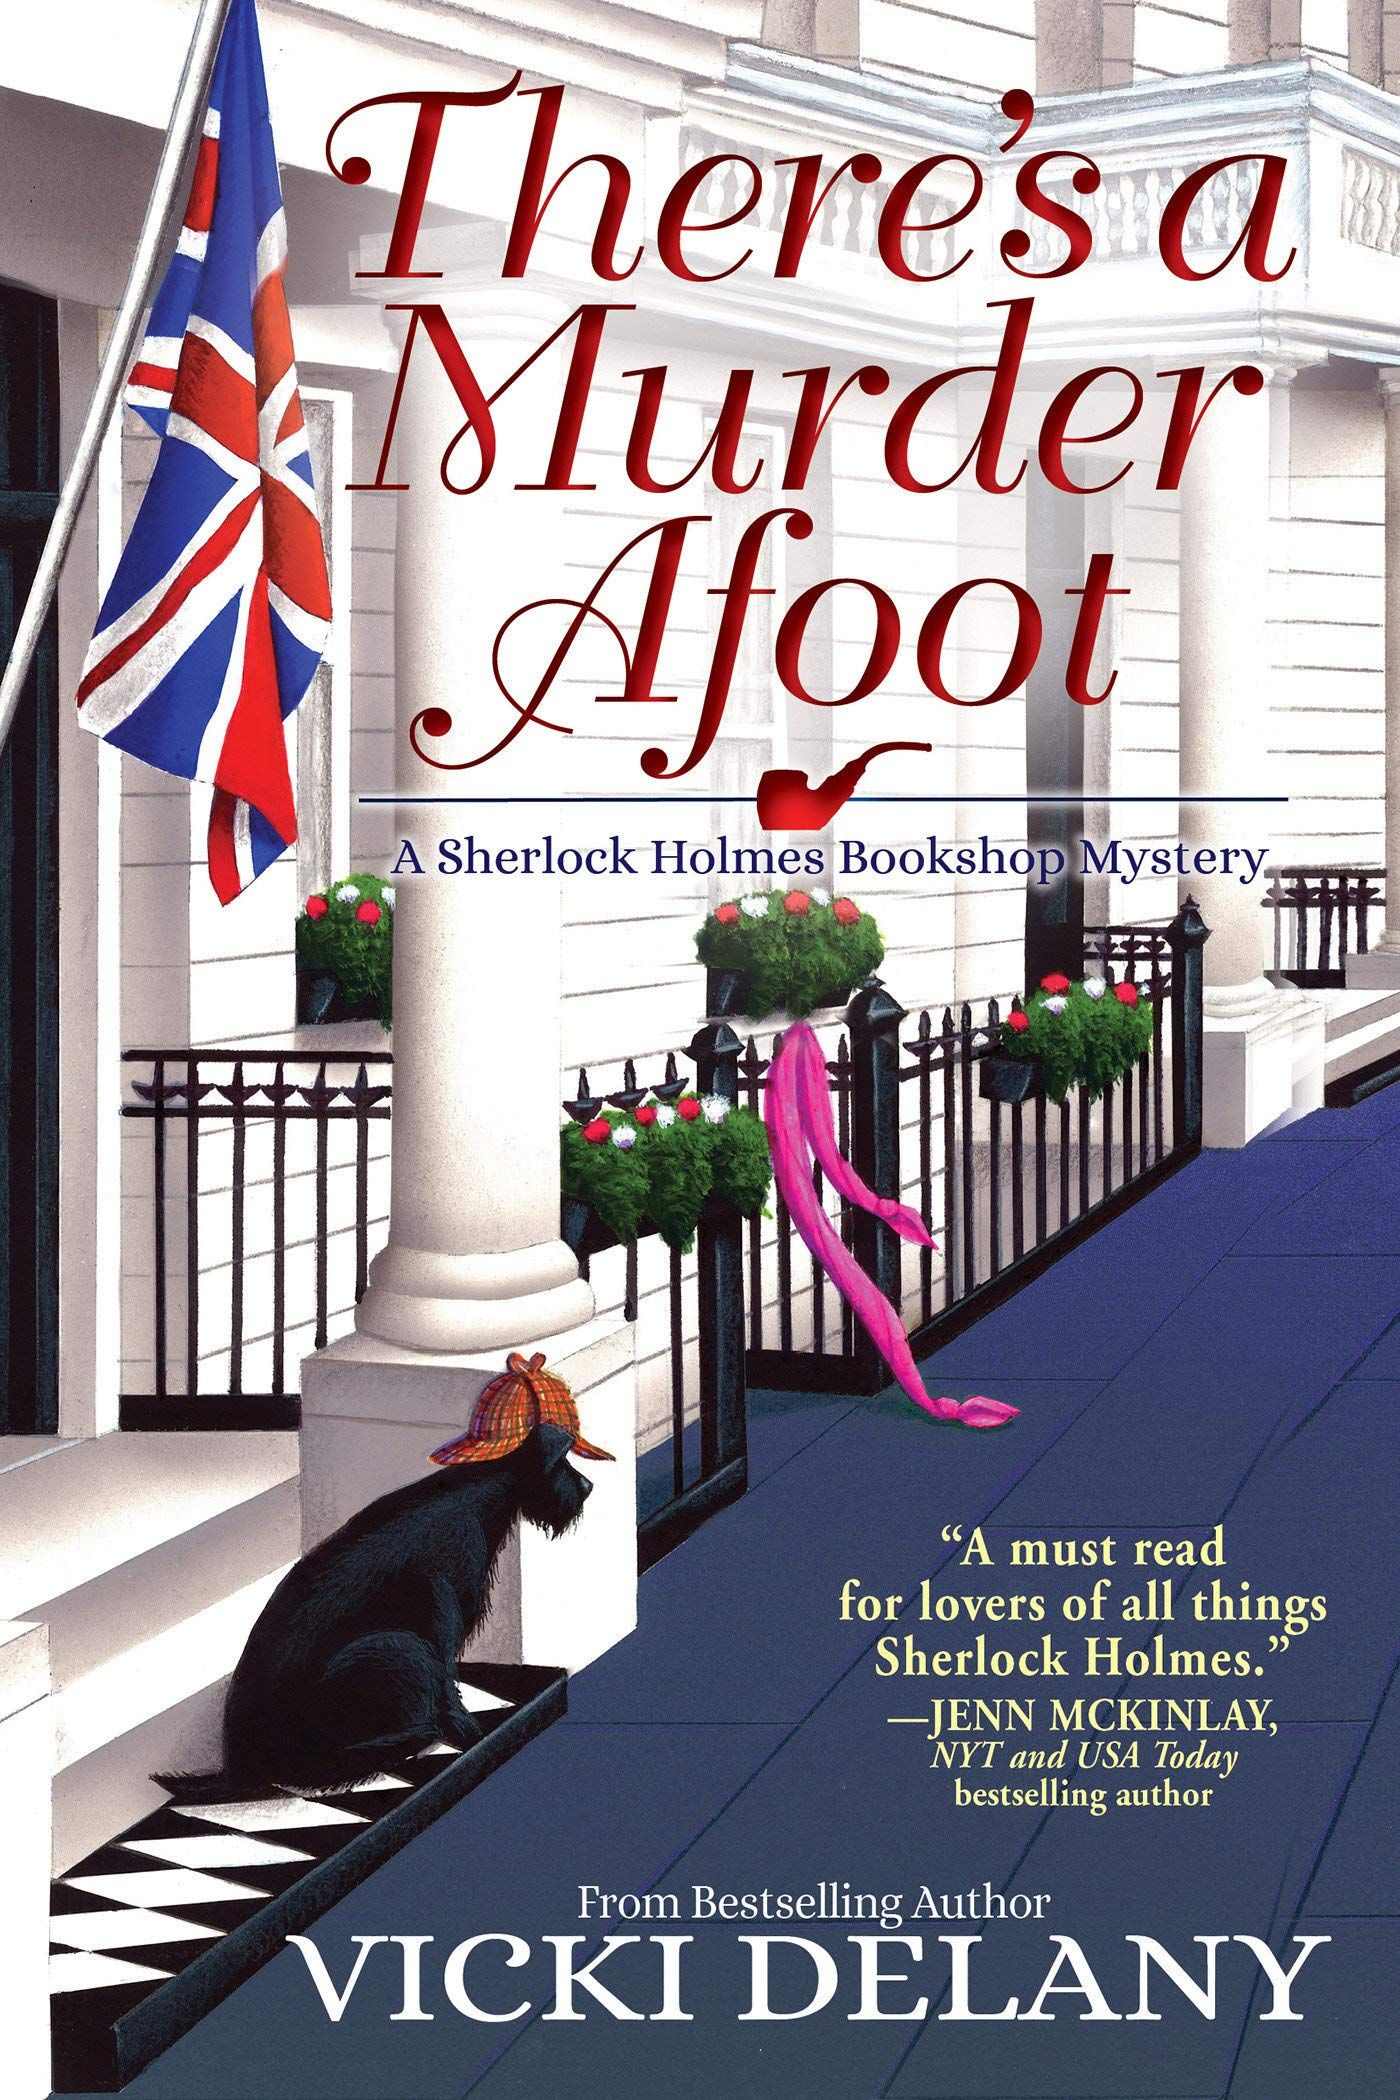 sherlock holmes bookshop mystery cover